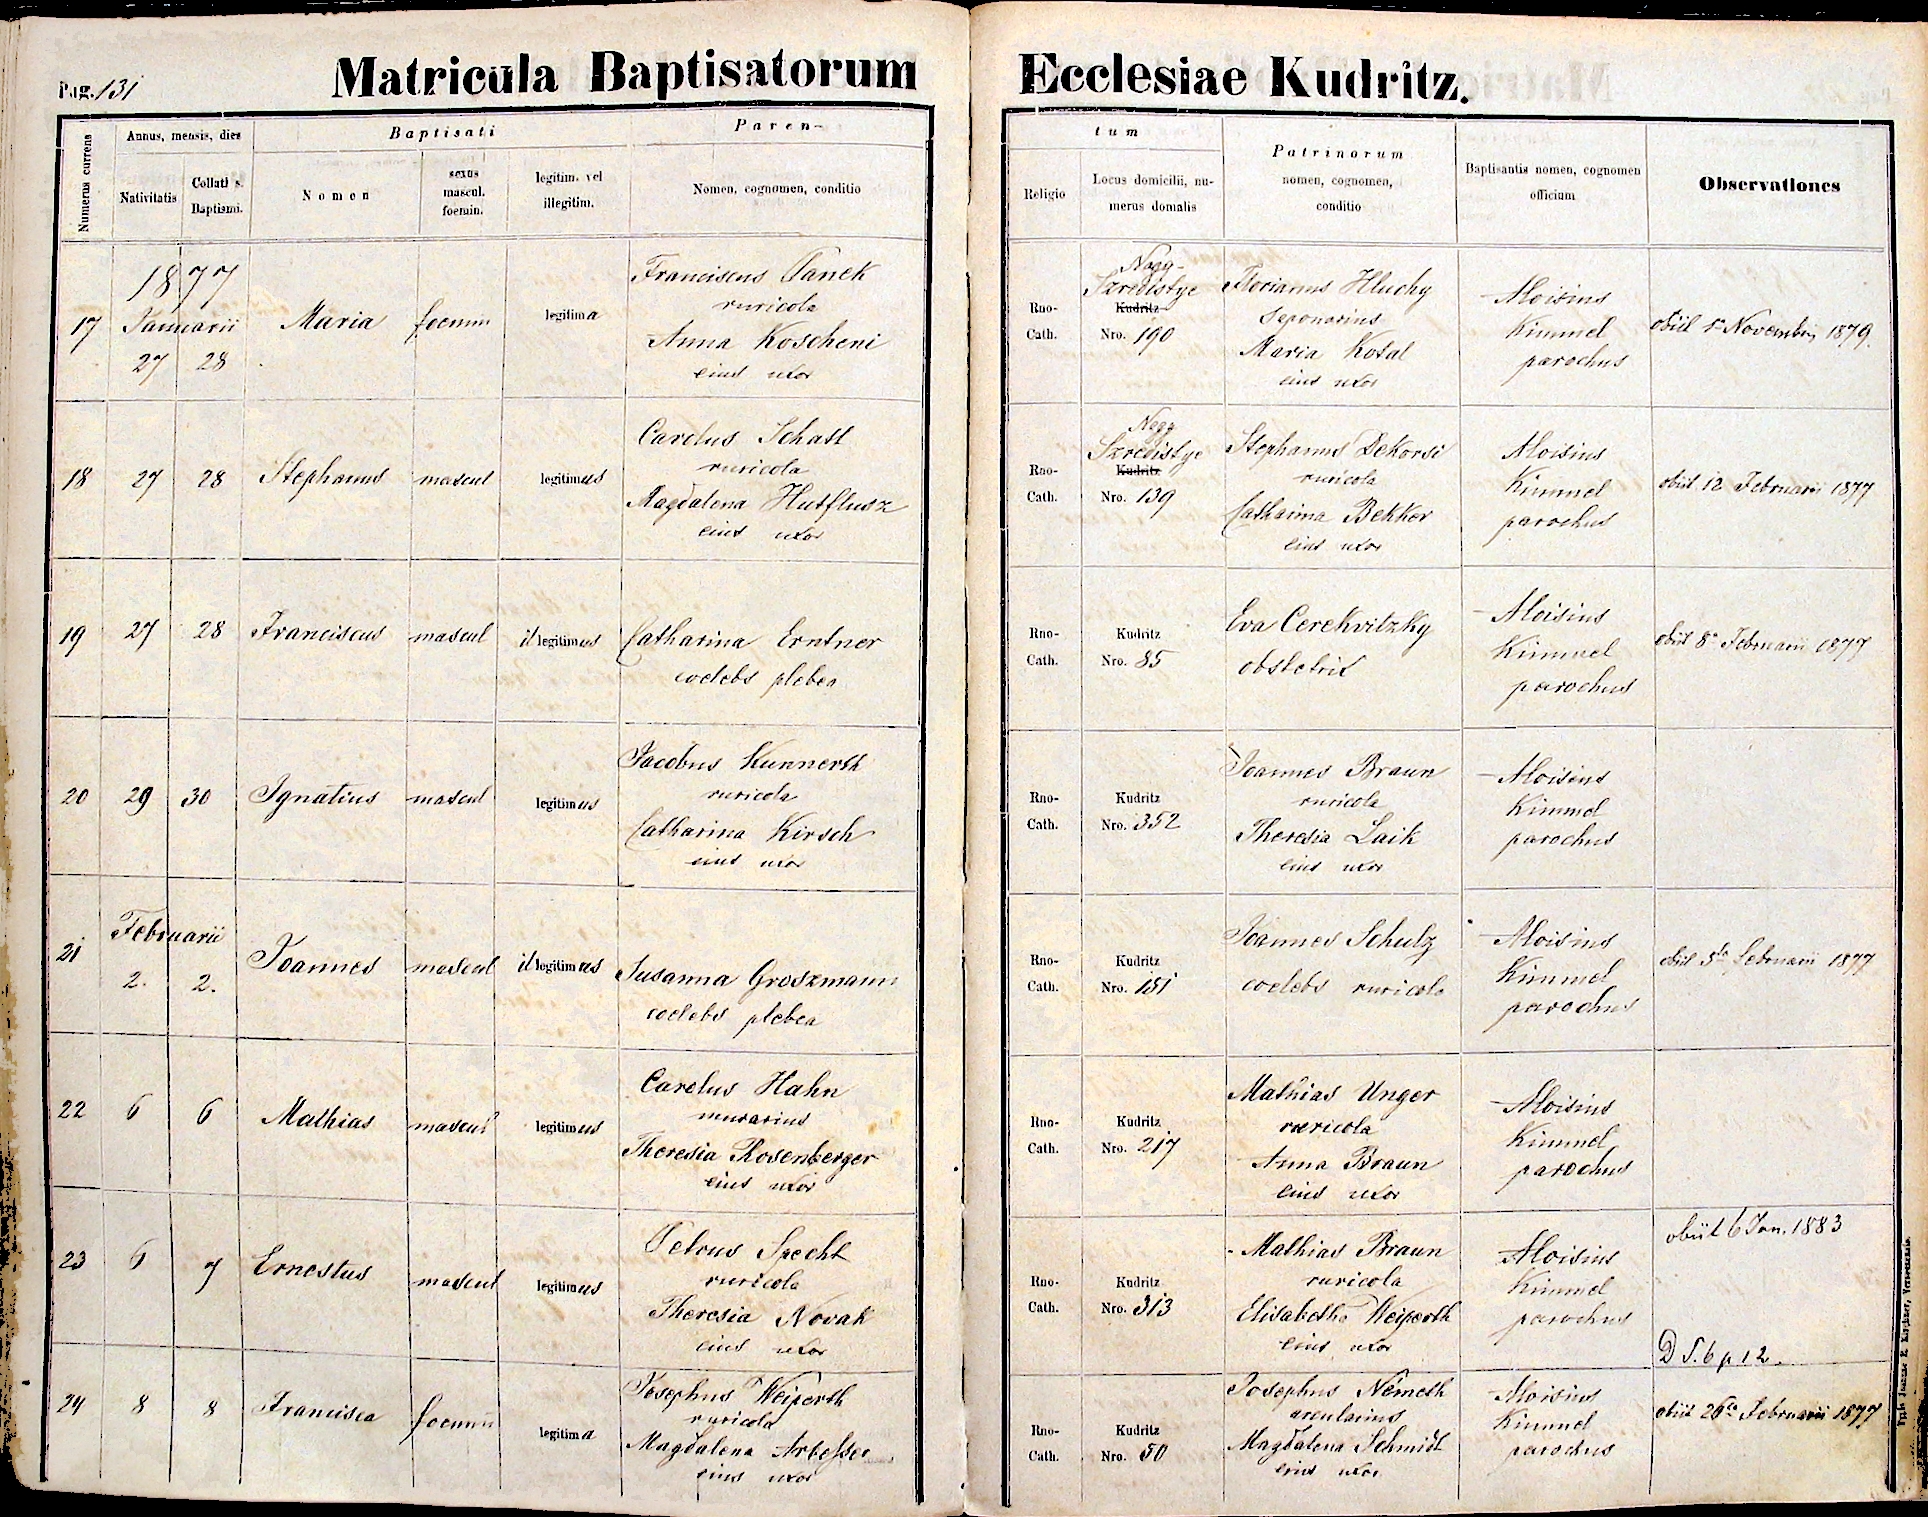 images/church_records/BIRTHS/1884-1899B/1892/131